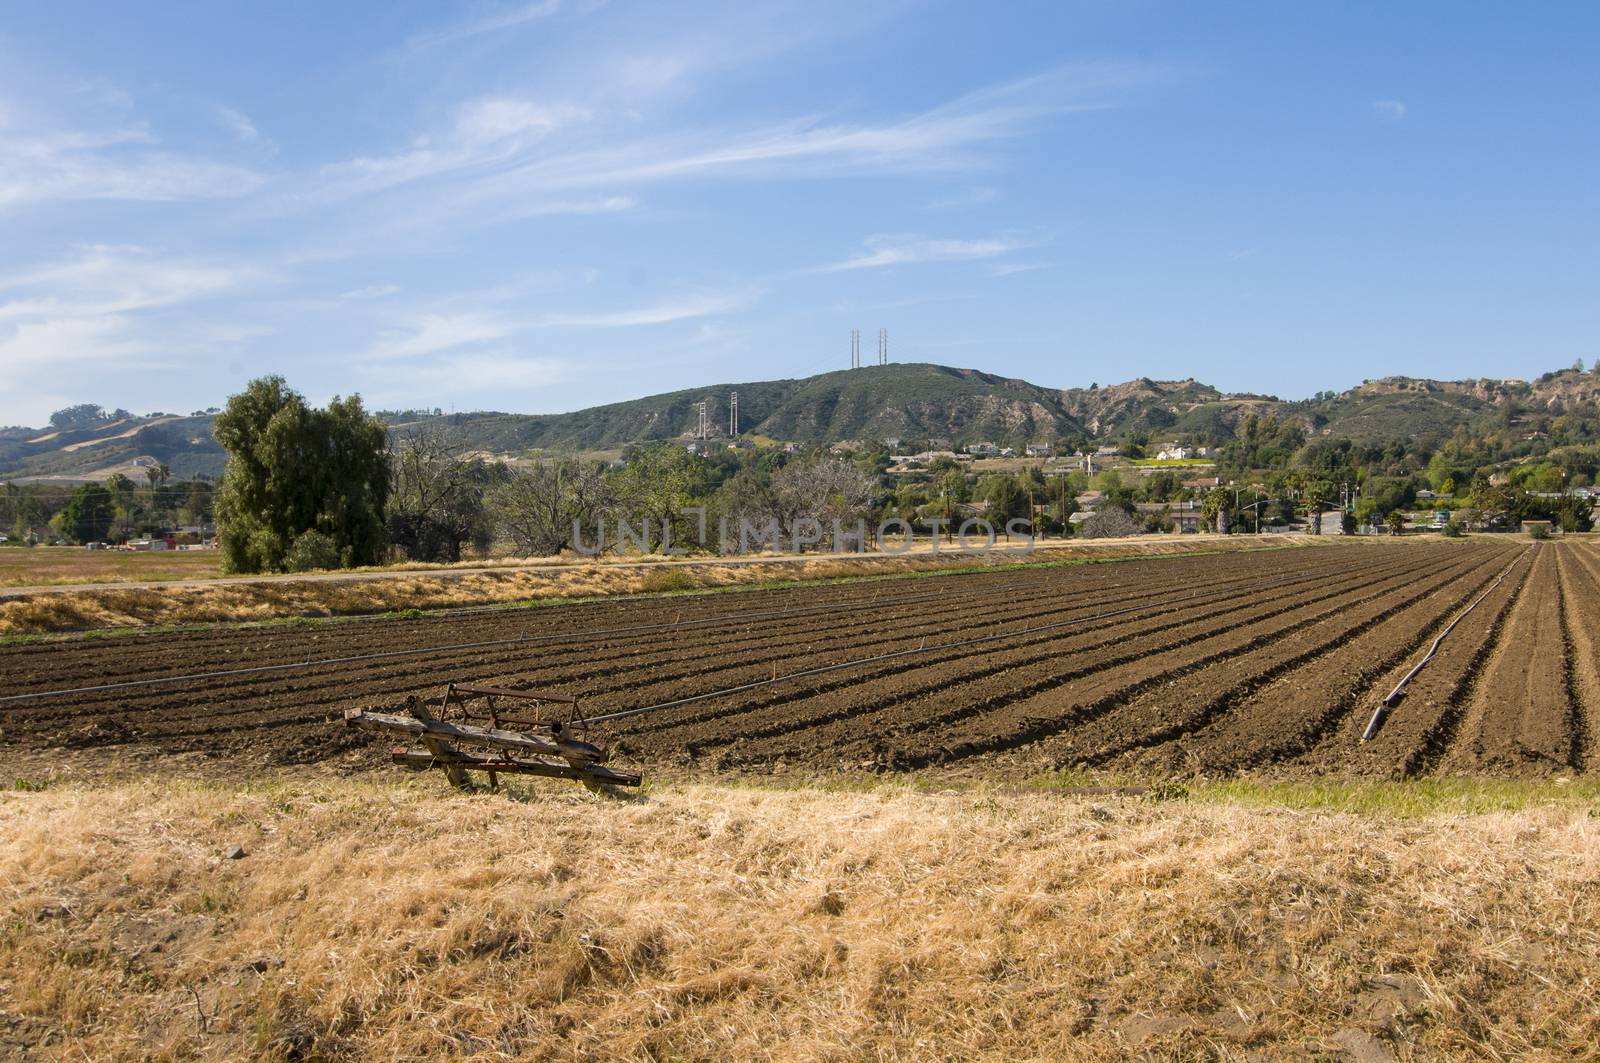 Farm field in Camarillo, California by Njean